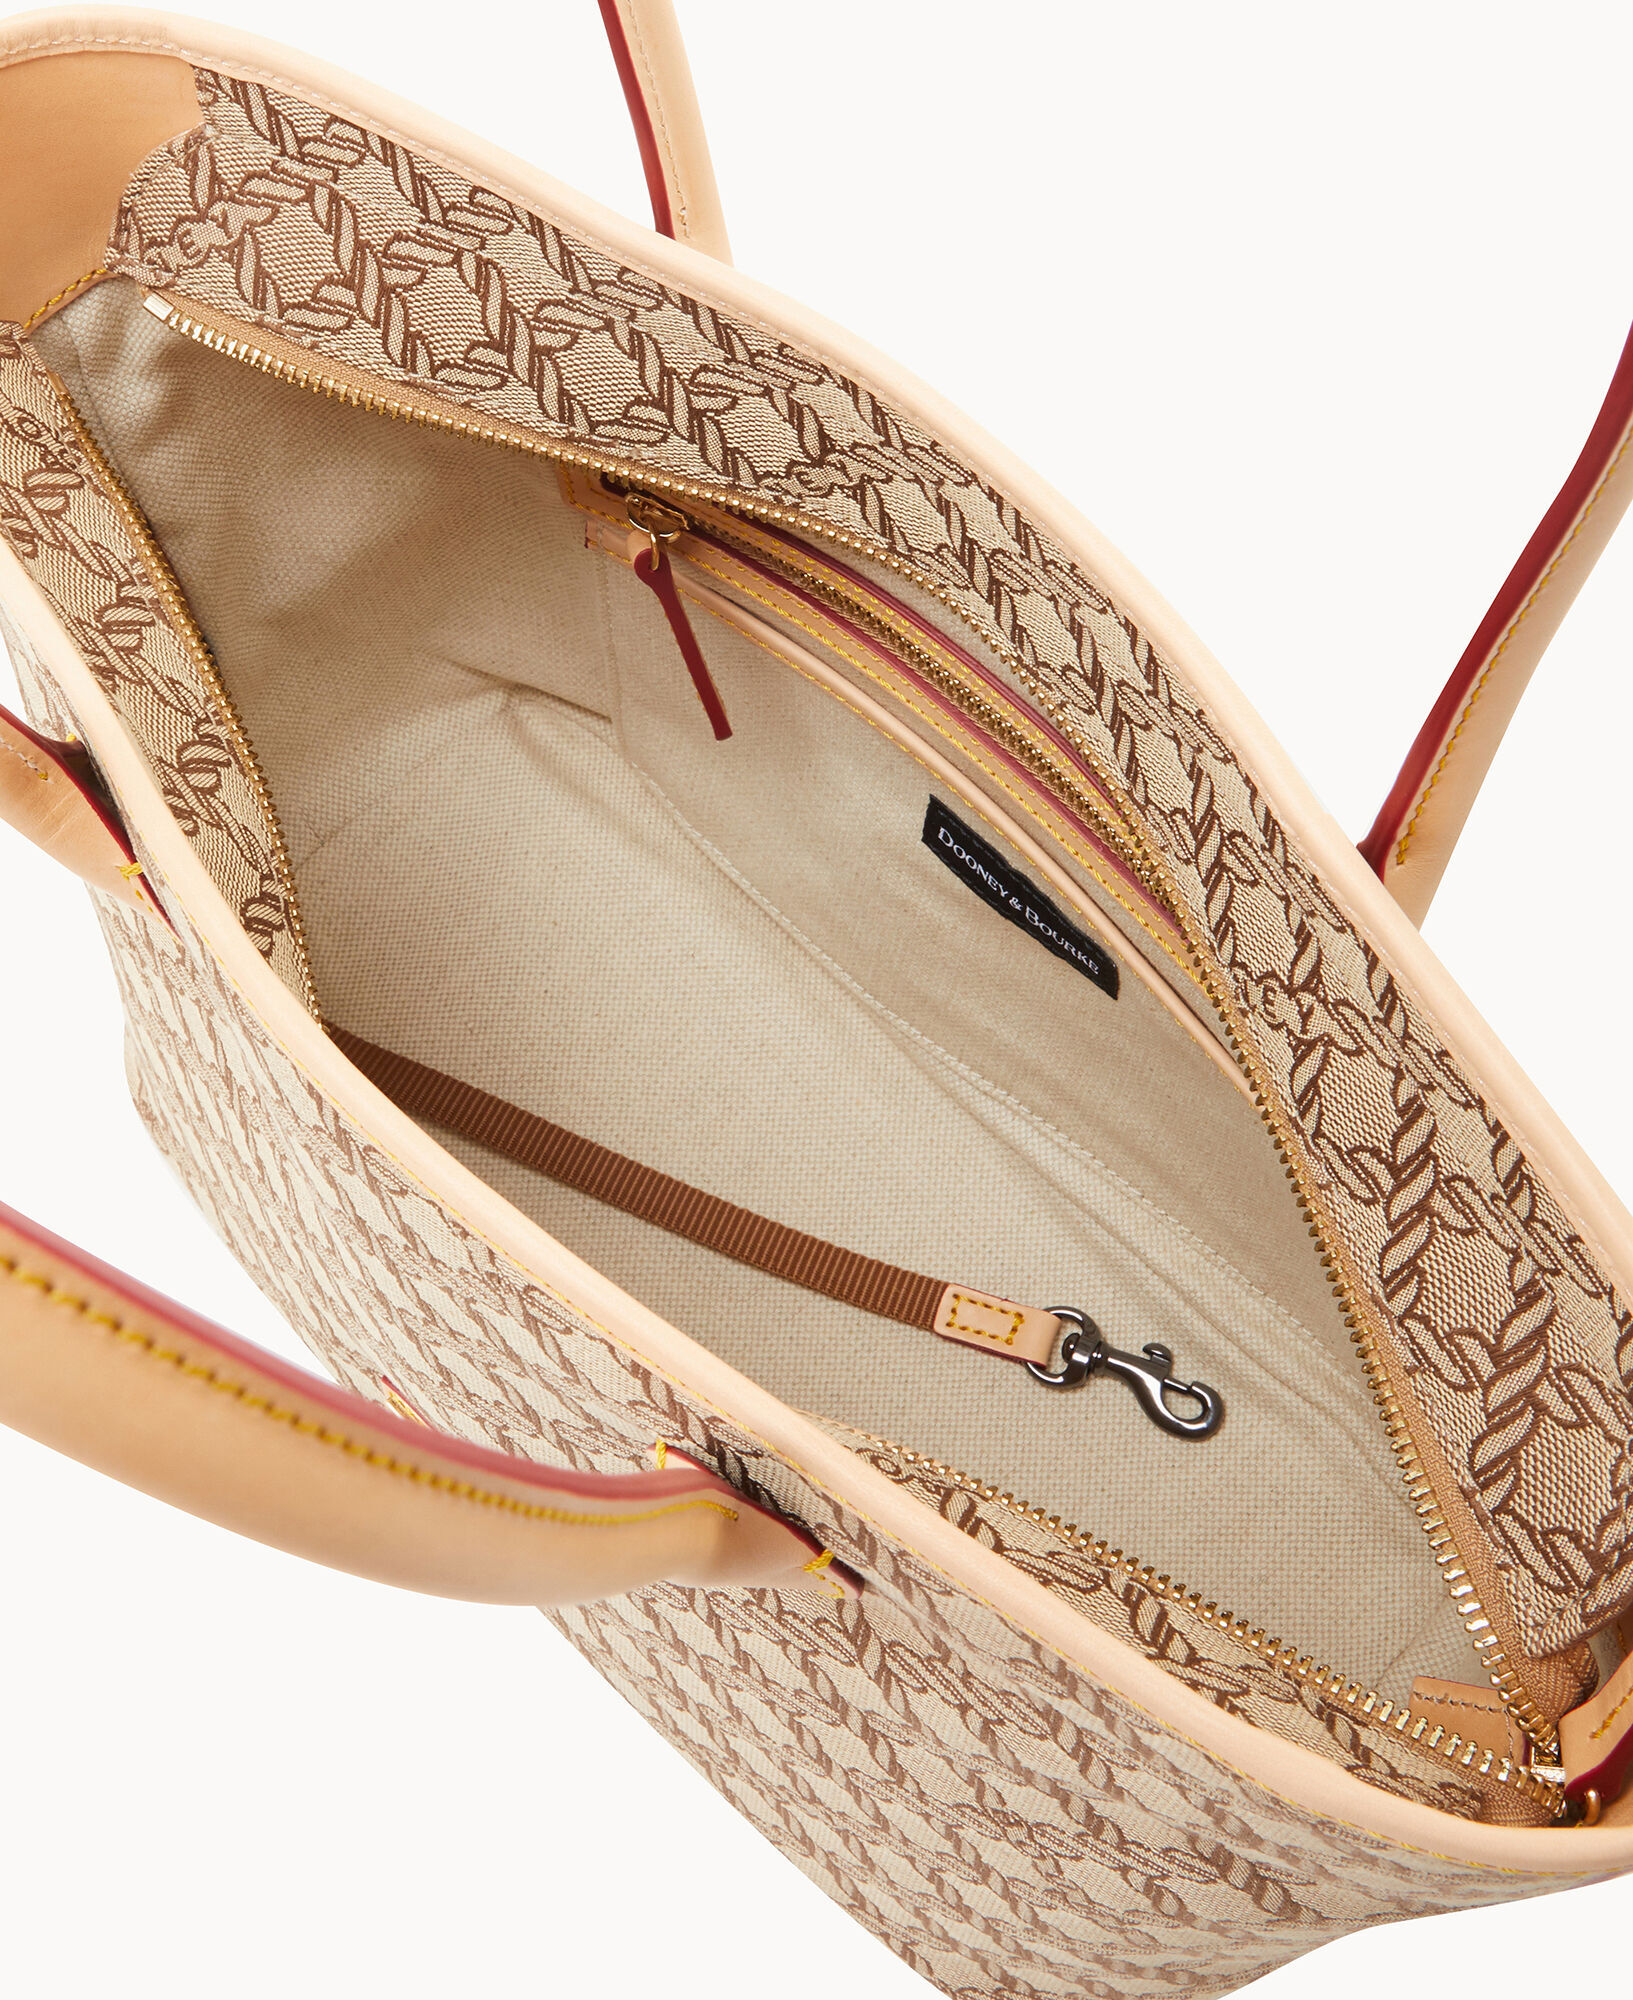 Dooney & Bourke Handbag, Saffiano Crossbody Pouchette - Marine: Handbags